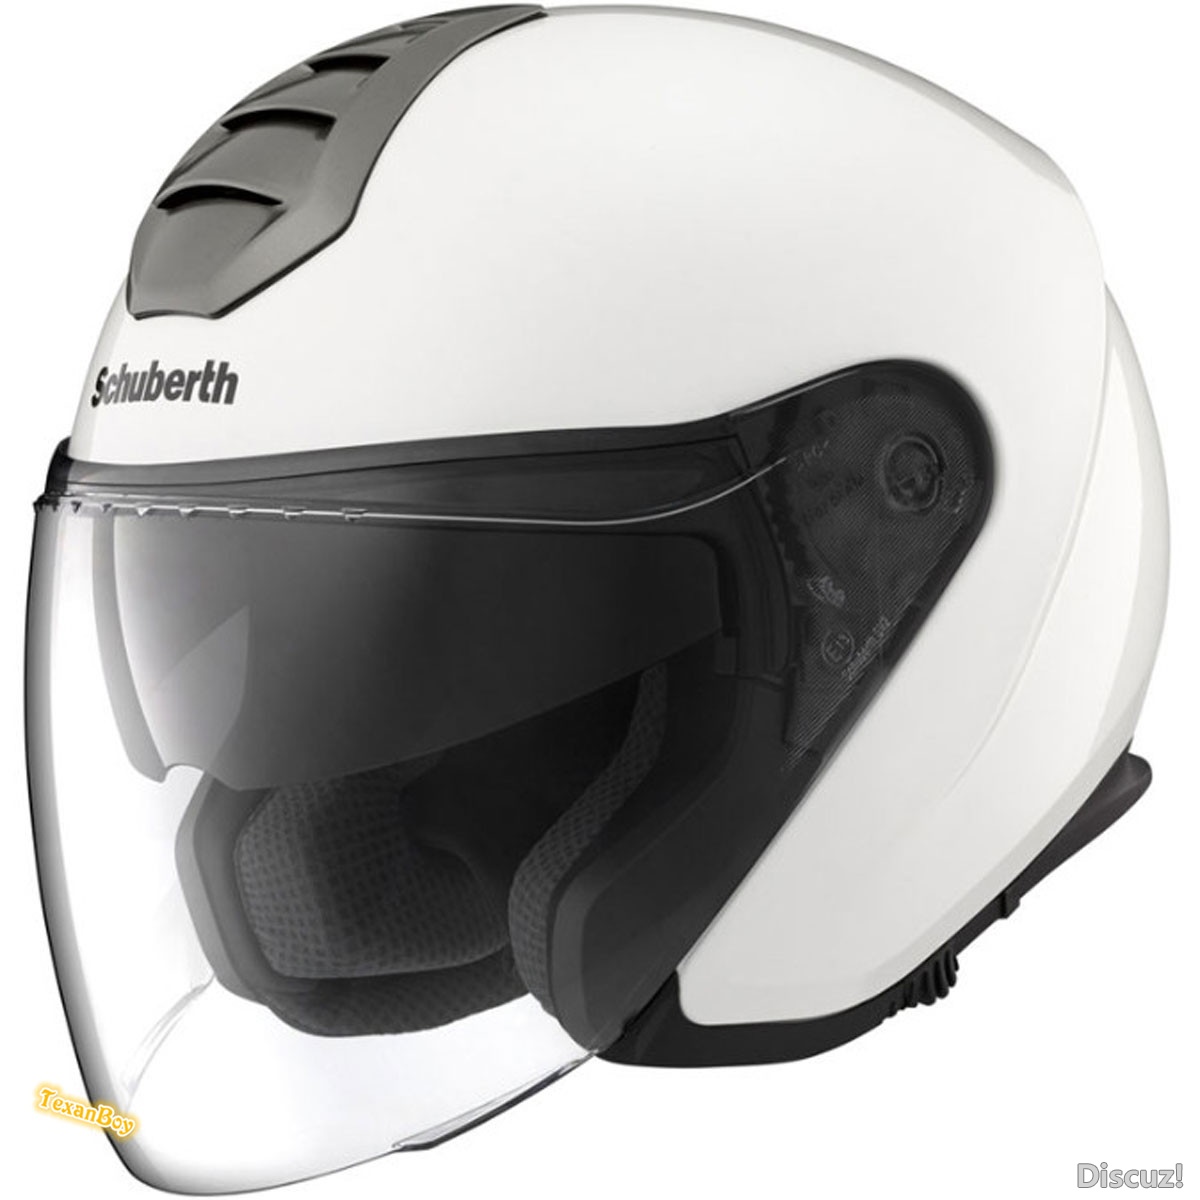 2015-schuberth-m1-helmet-mcss.jpg